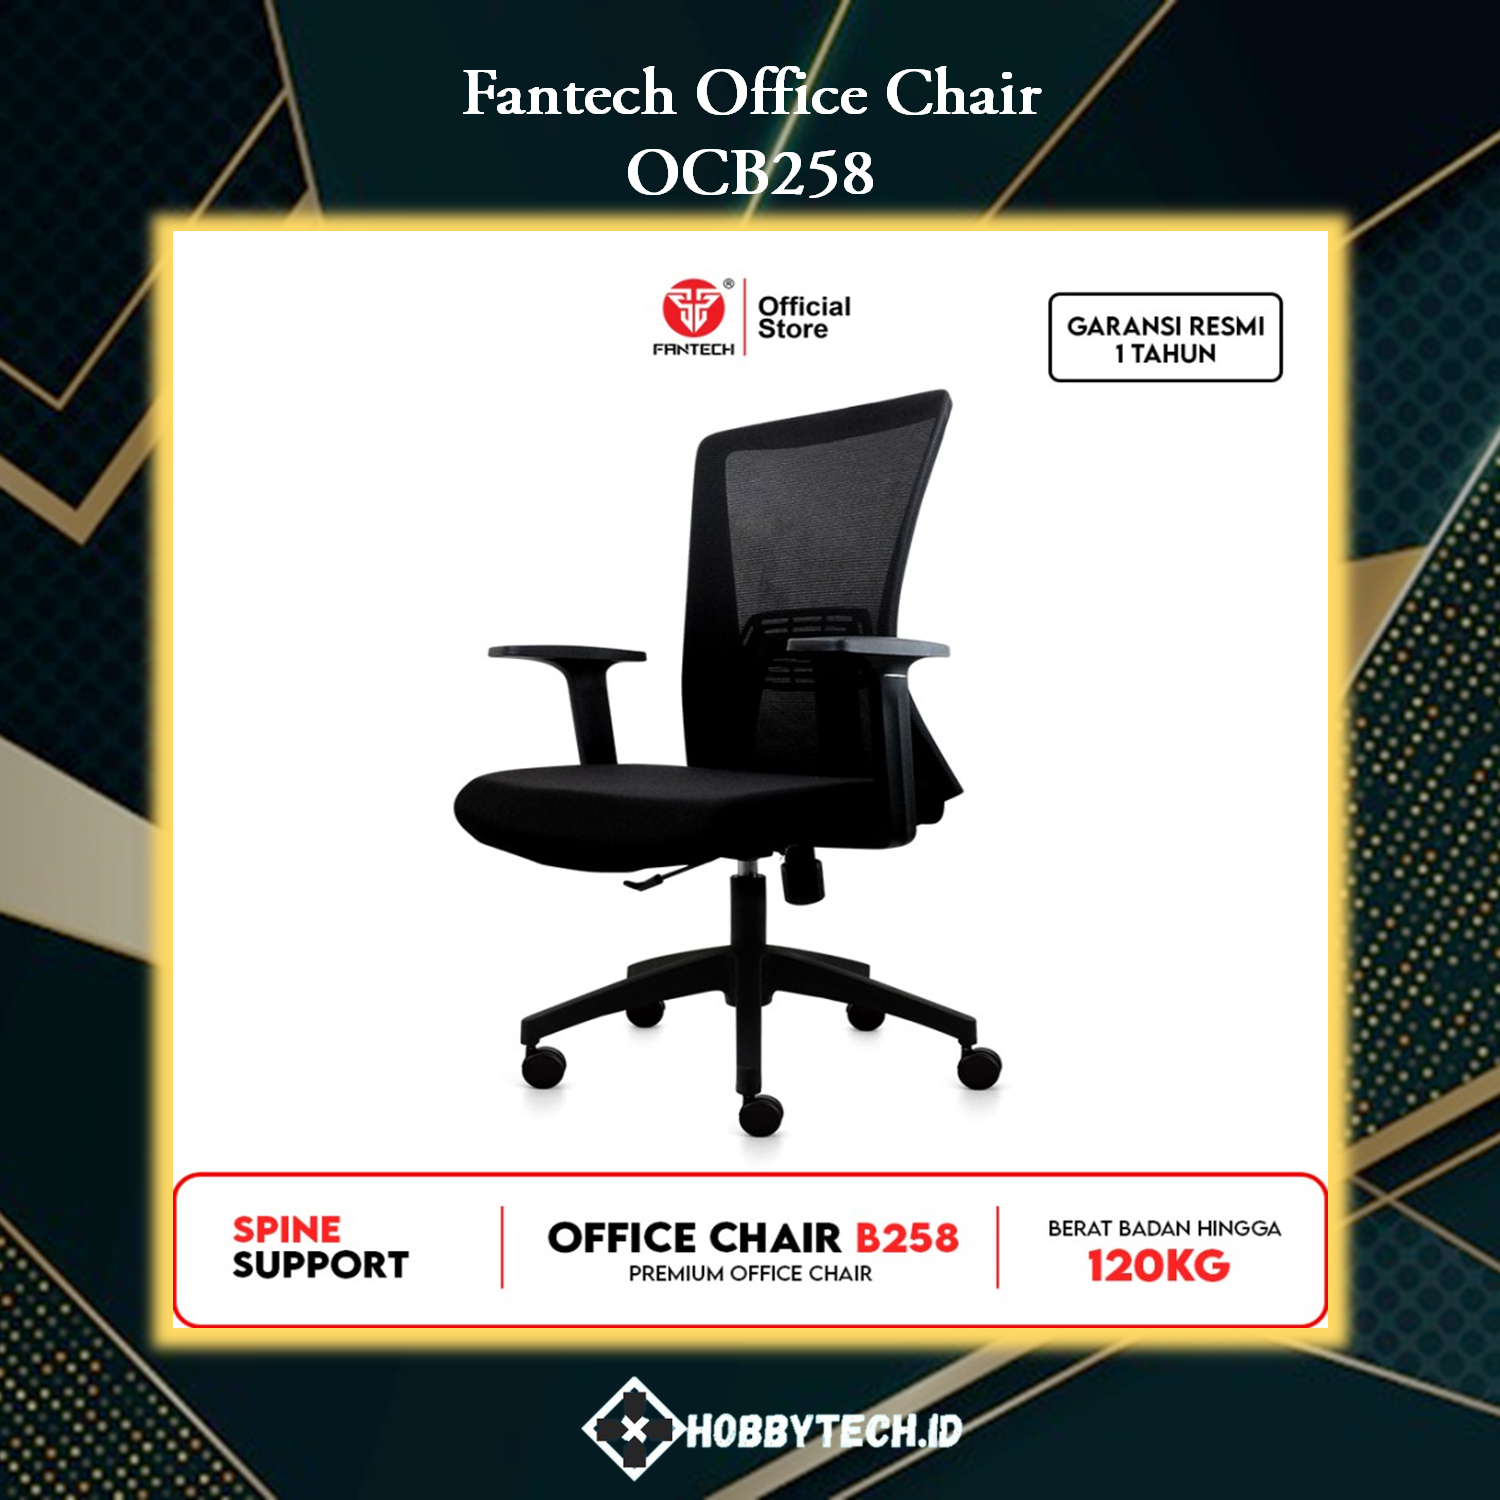 Fantech Kursi Kerja Kantor OCB258 Premium Office Chair